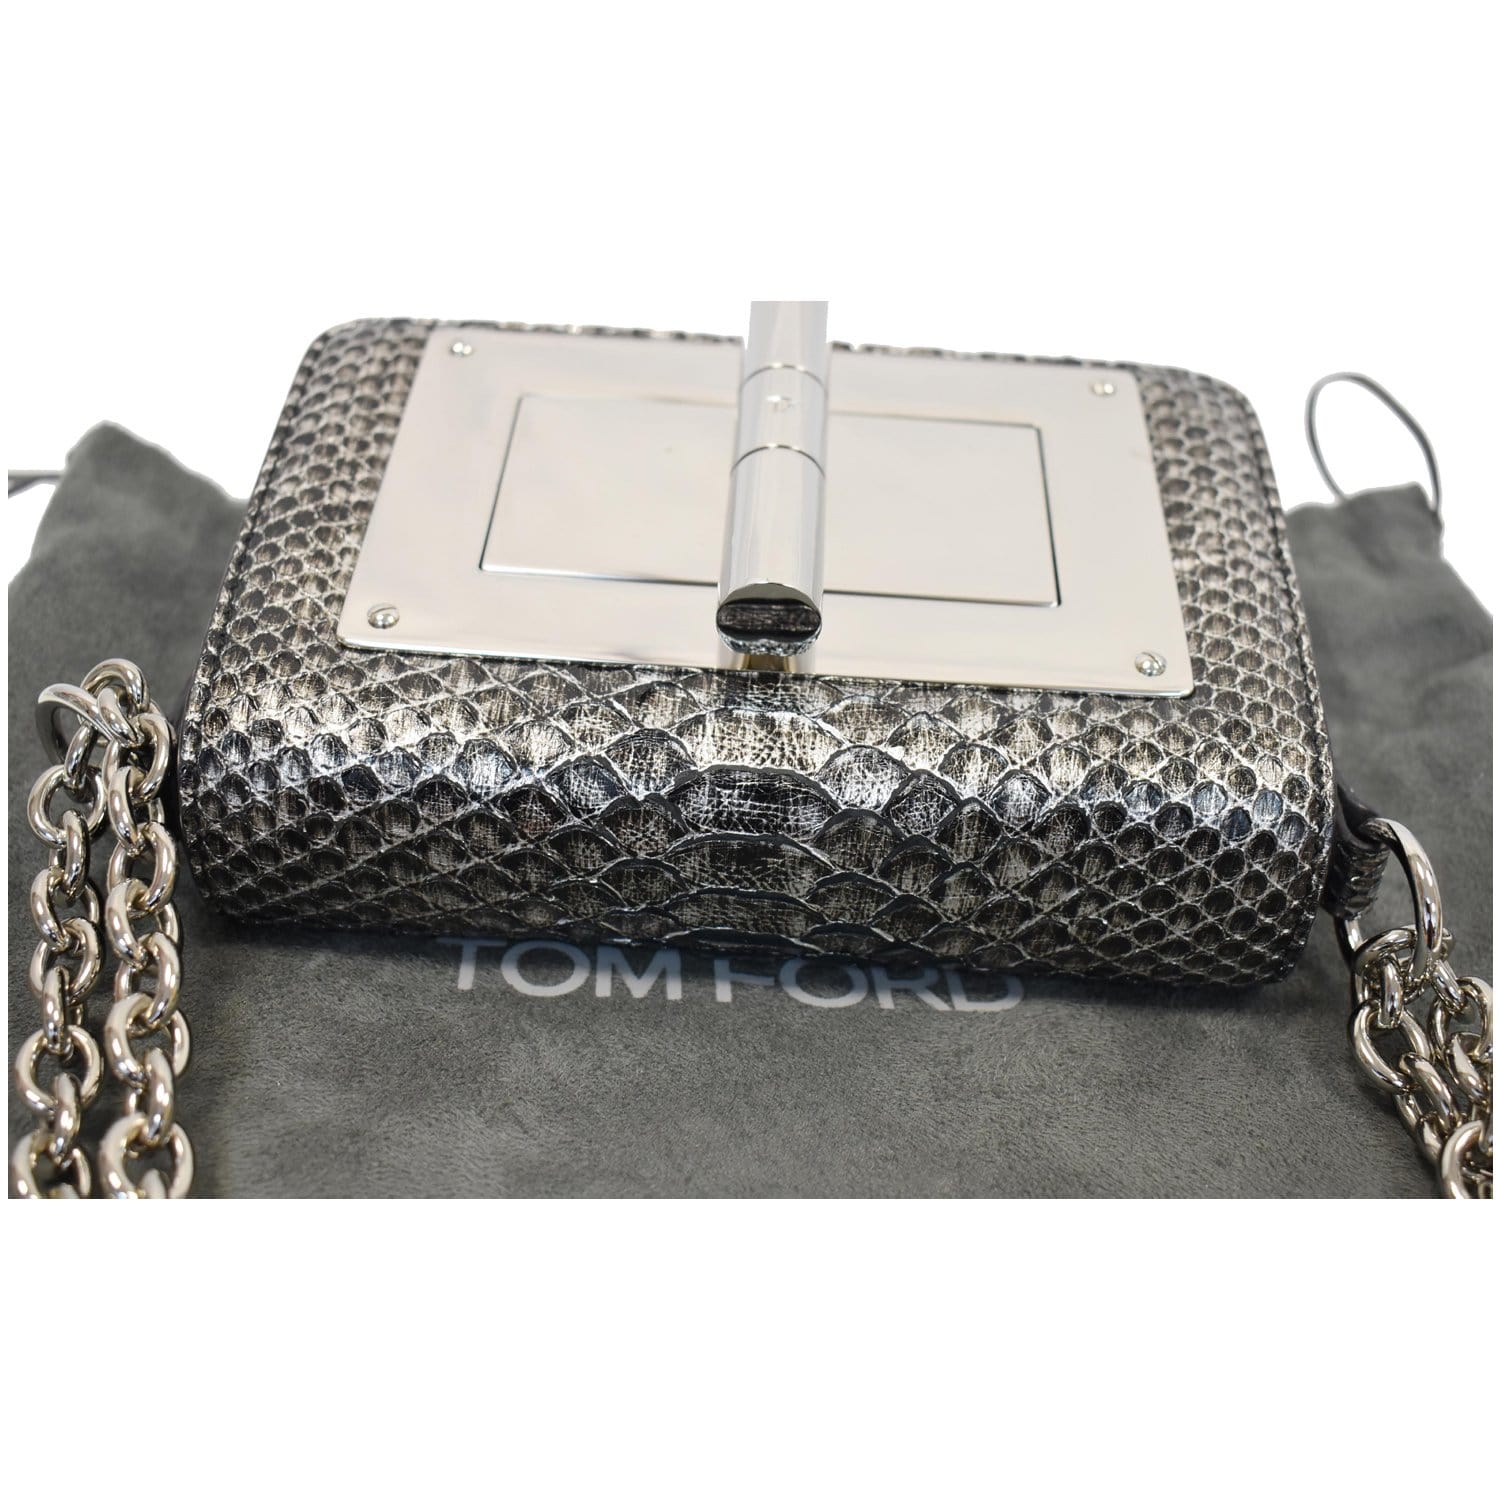 Tom Ford - Natalia Black Leather Small Chain Bag